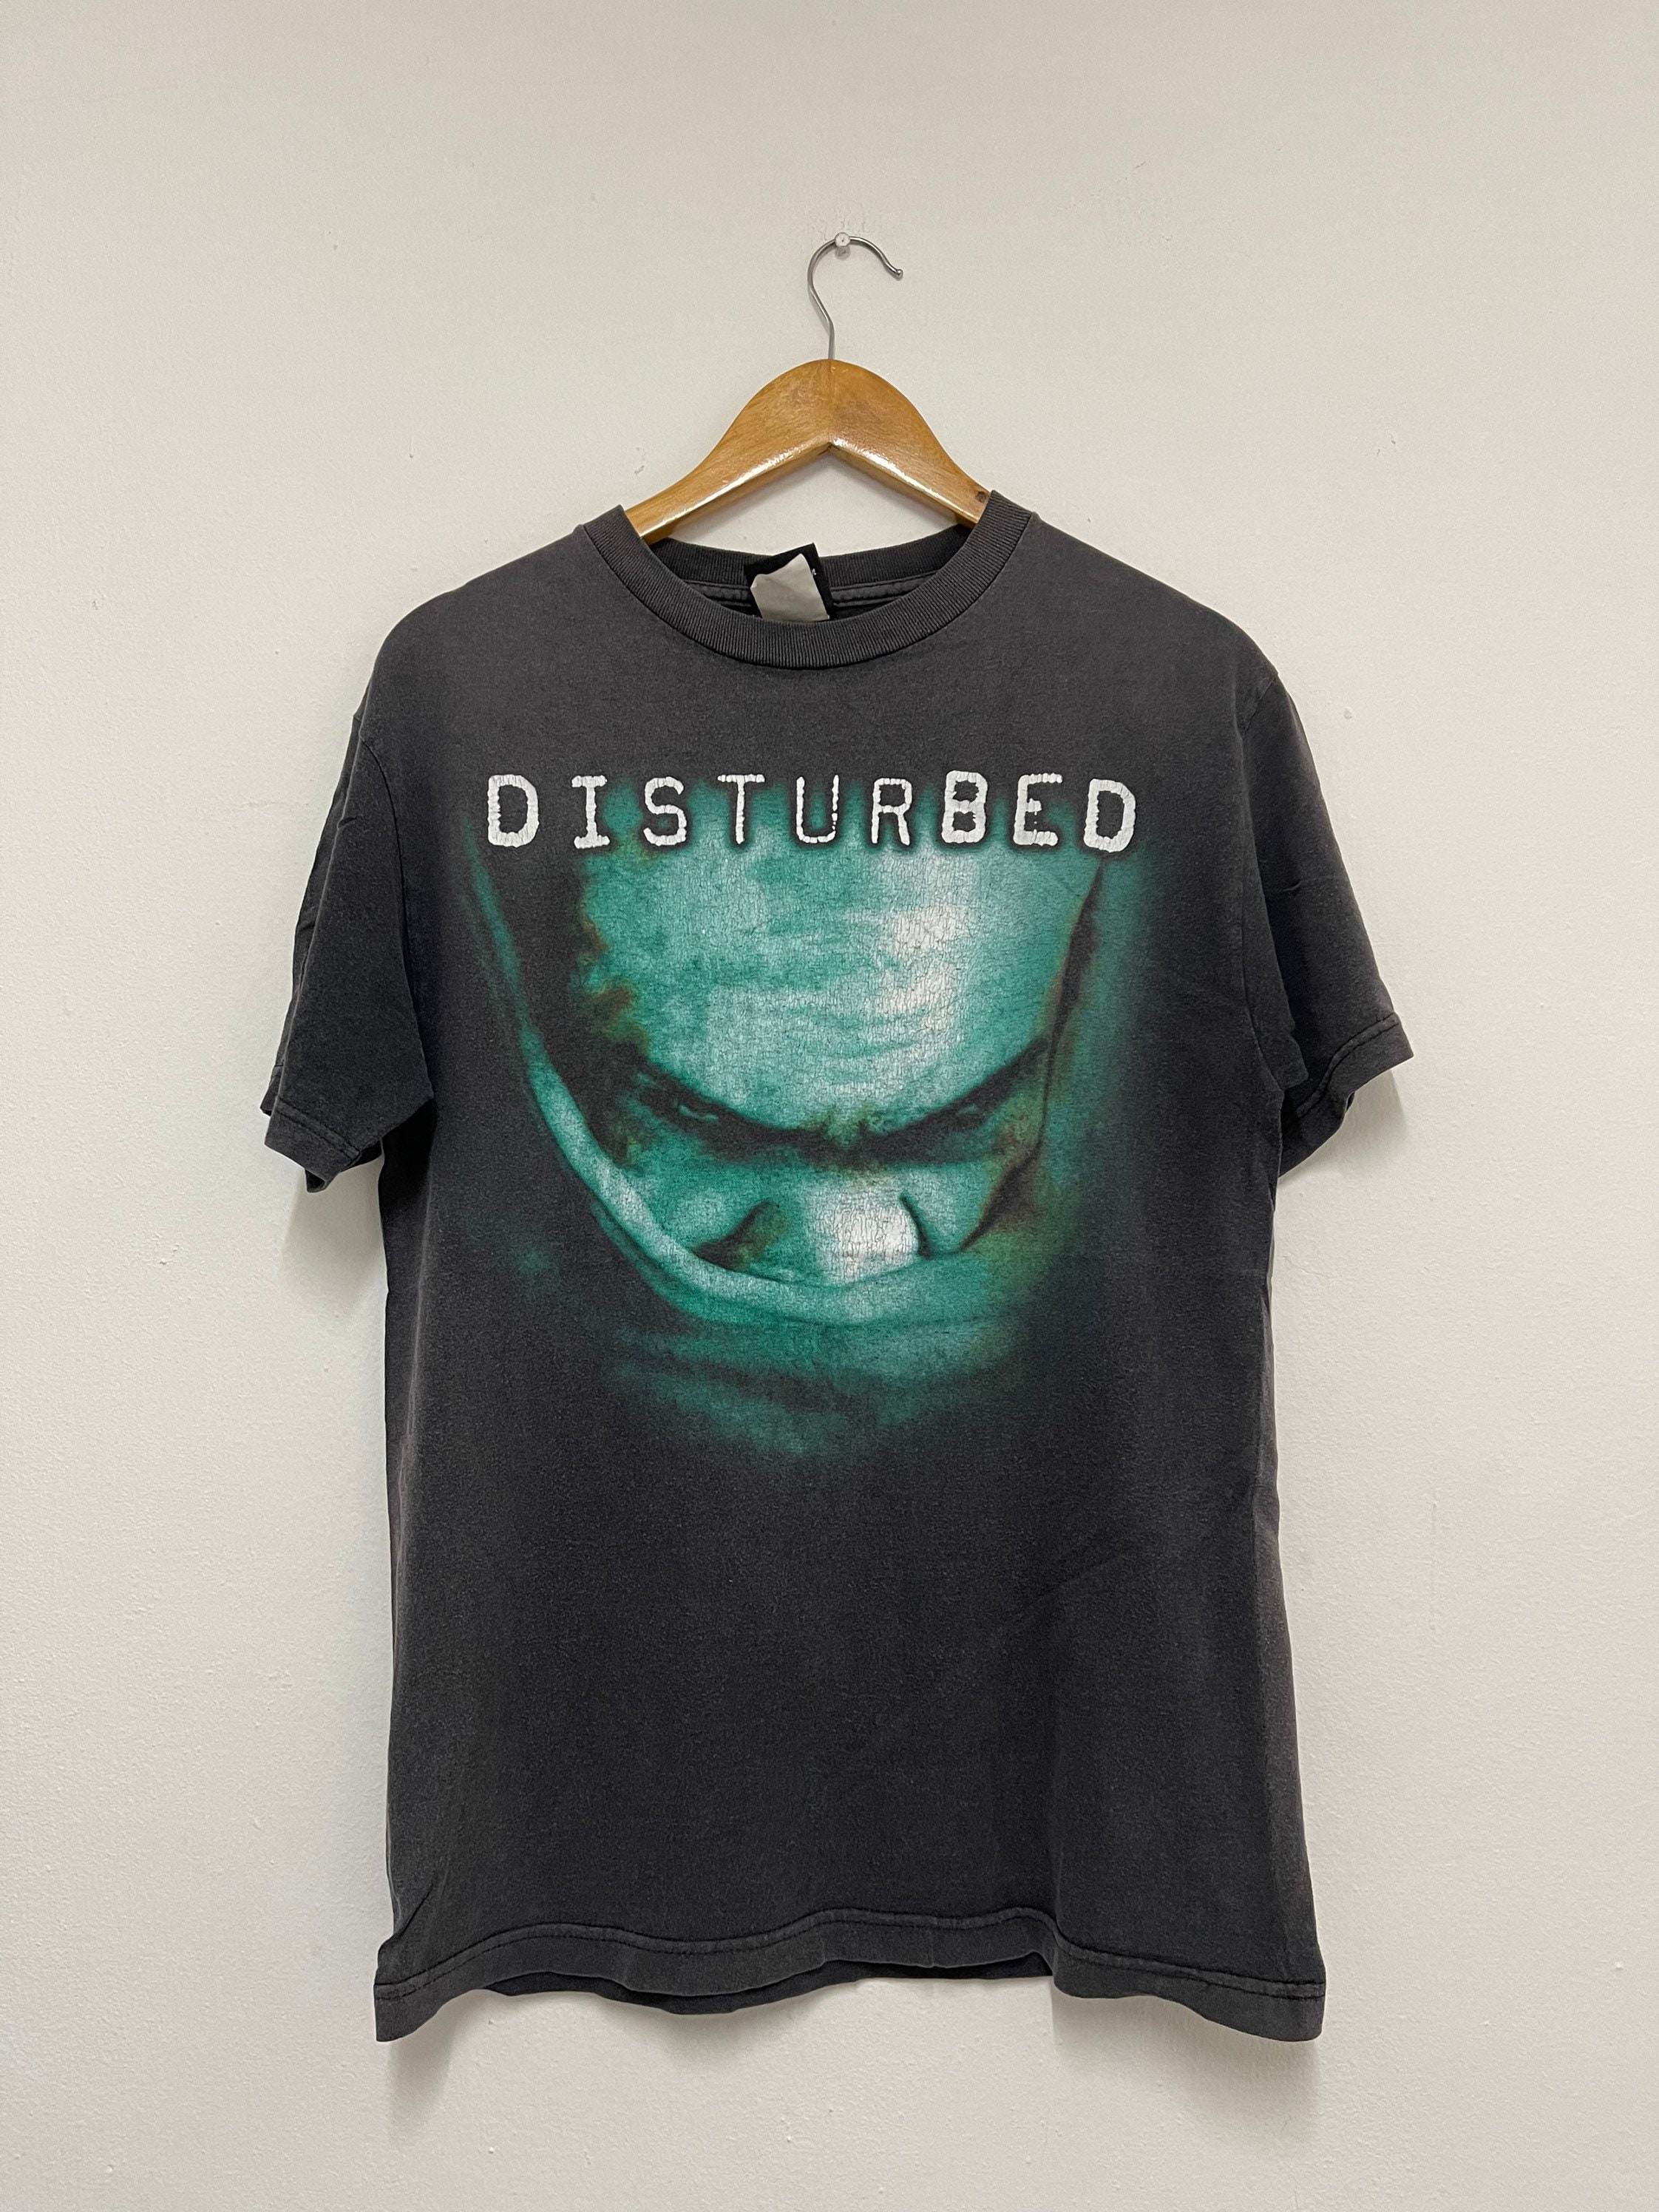 Disturbed the / T-shirt Sickness / Metal M Etsy Band 2000 - Vintage / Streetwear Nu / Music Black Tour / Y2K Band